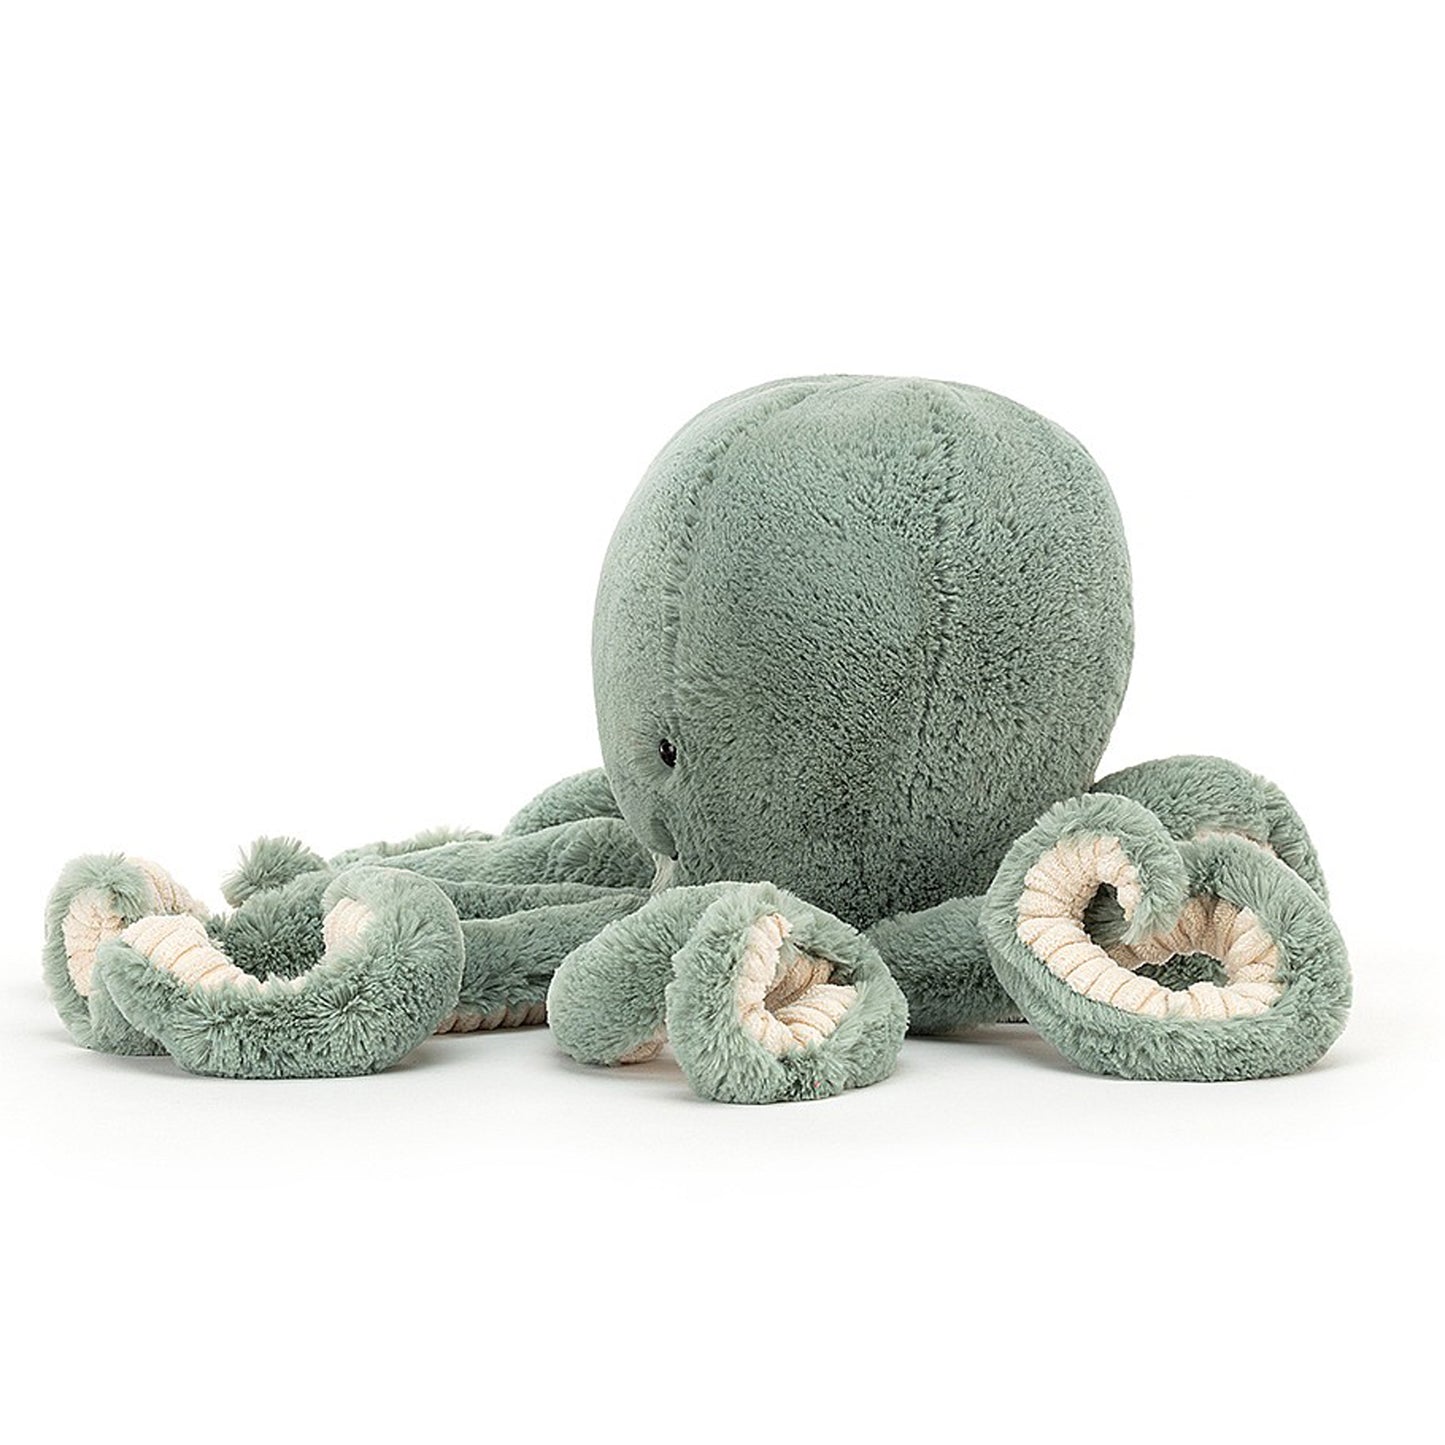 odyssey octopus soft toy in medium